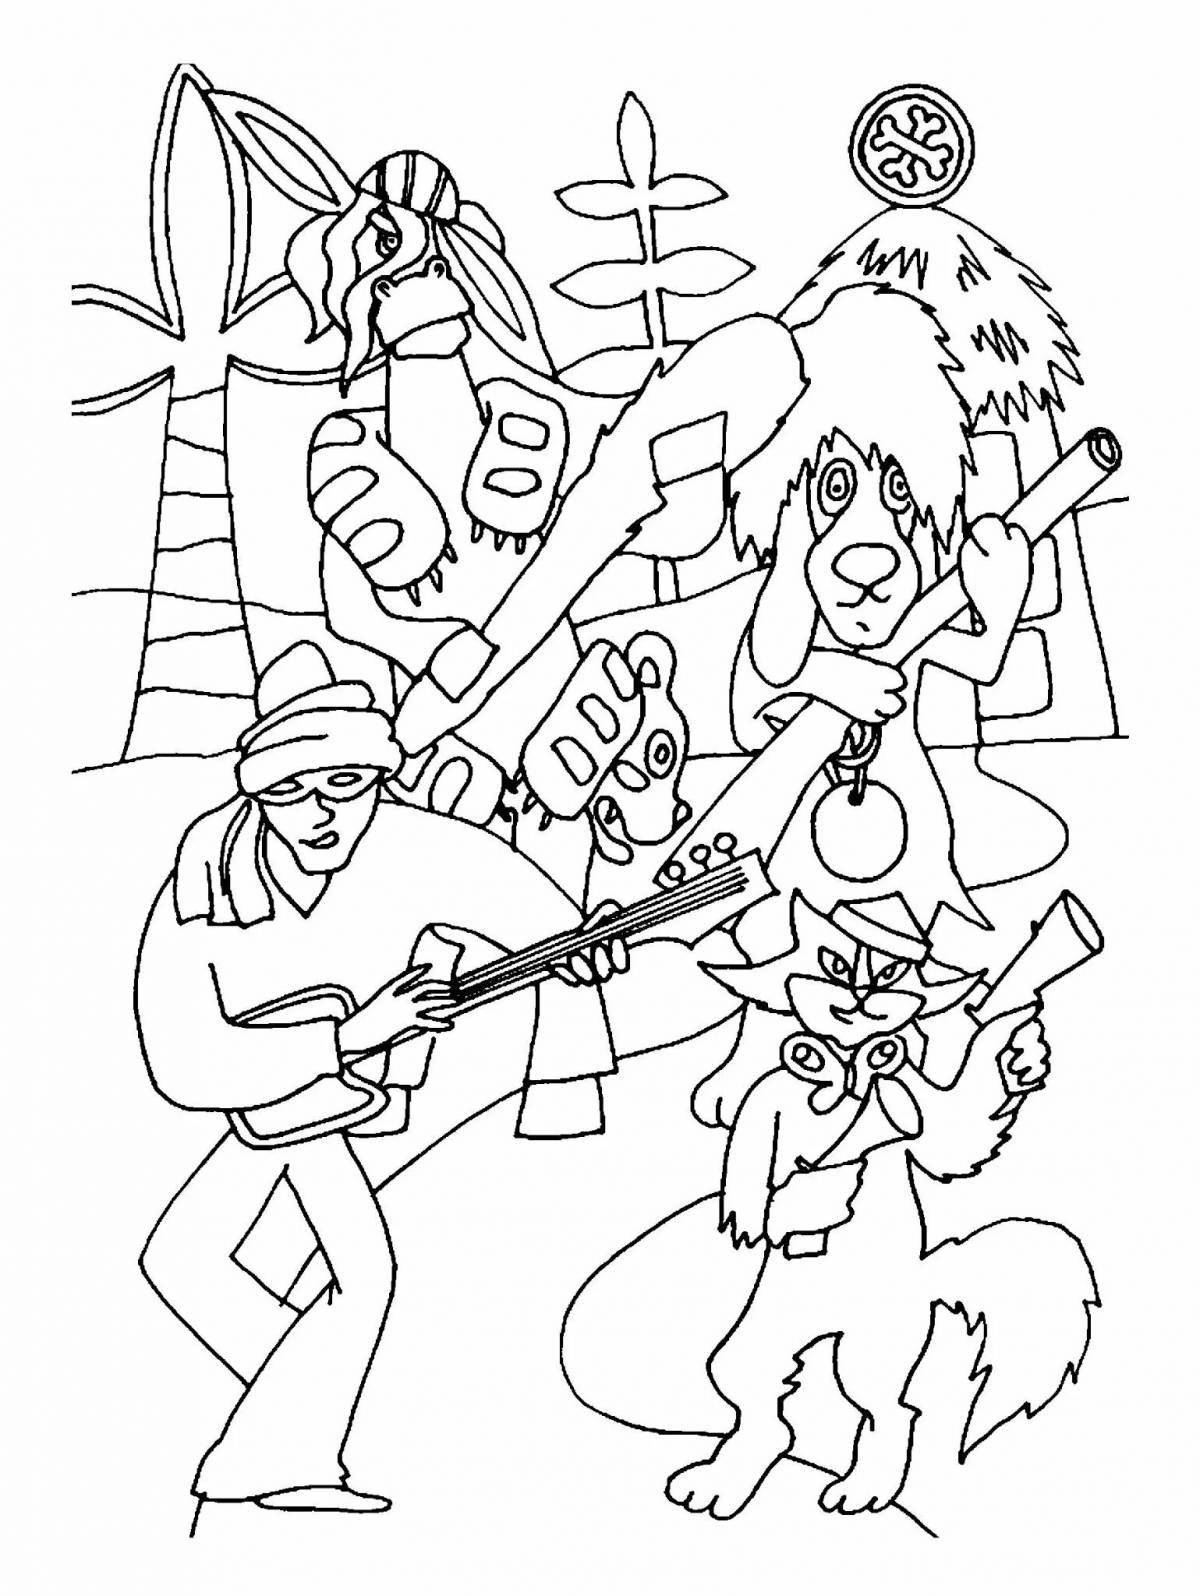 Coloring page joyful troubadour